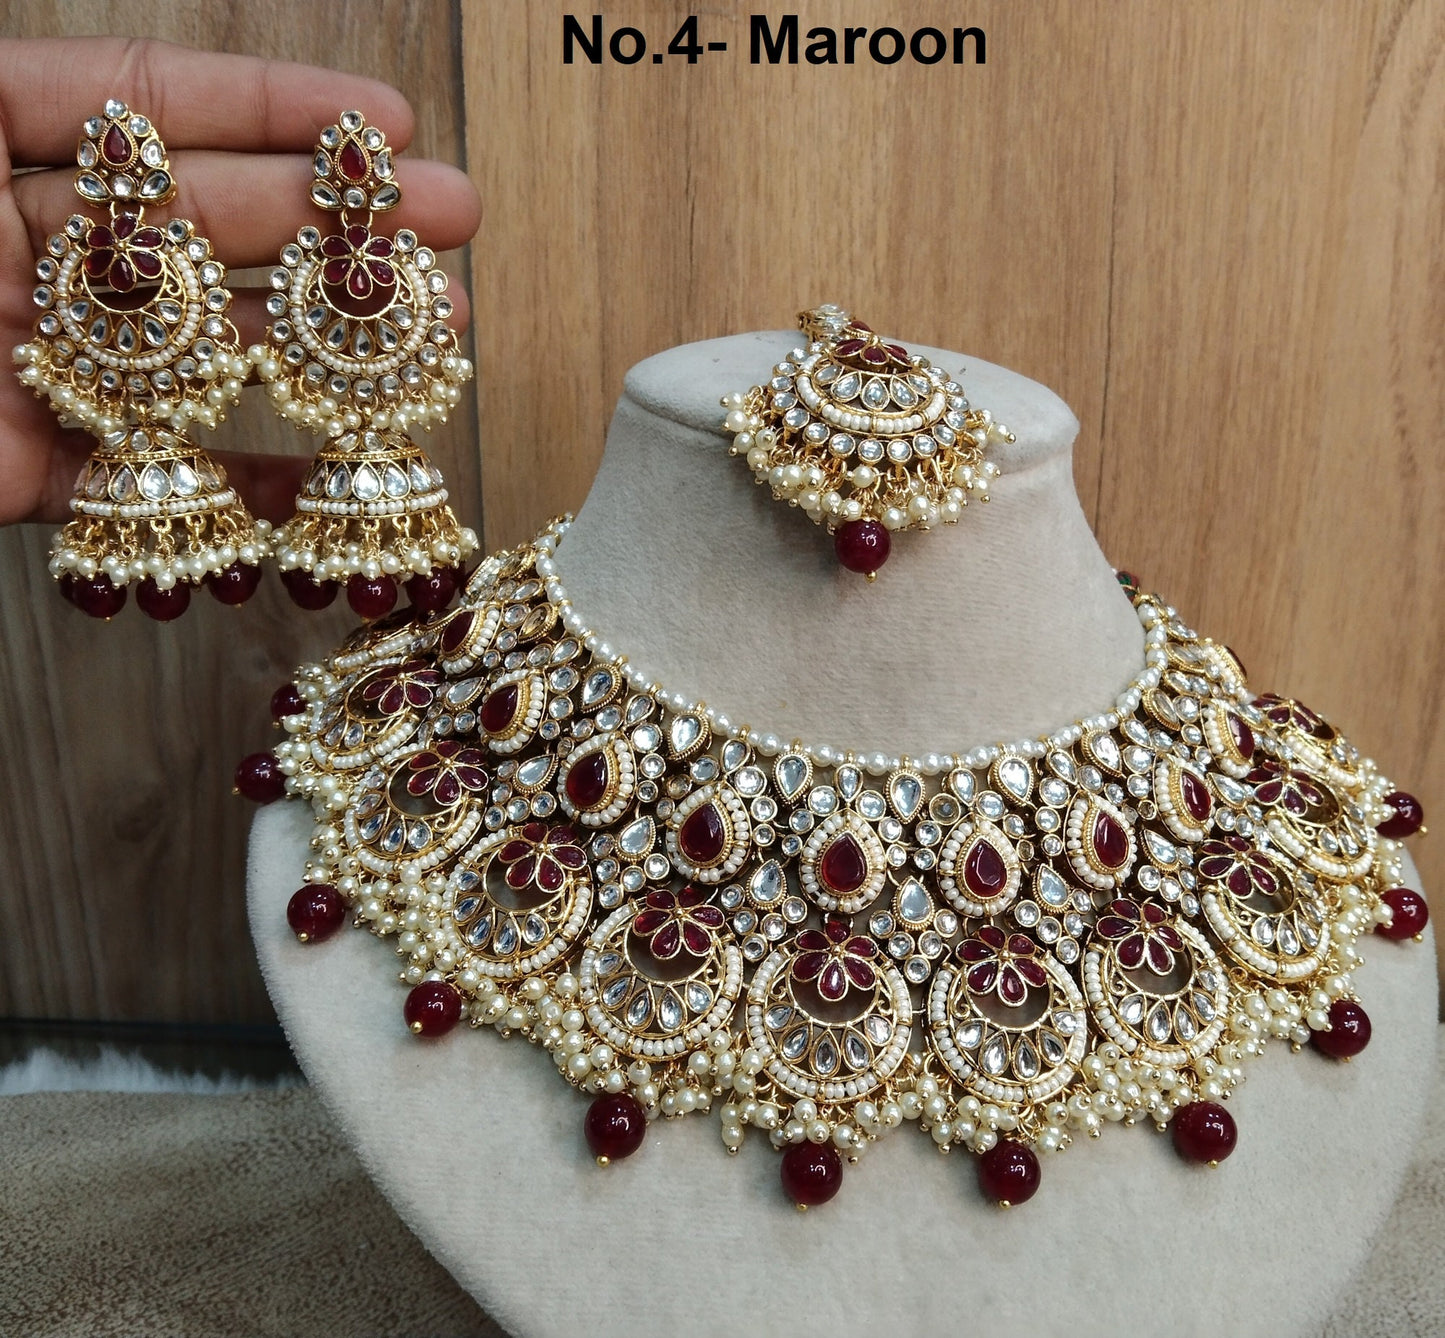 Indian Jewellery/ Gold Bridal Kundan necklace Set Indian gold white, maroon, pastel green,black, peach Bridal Jewellery Harris justin Necklace